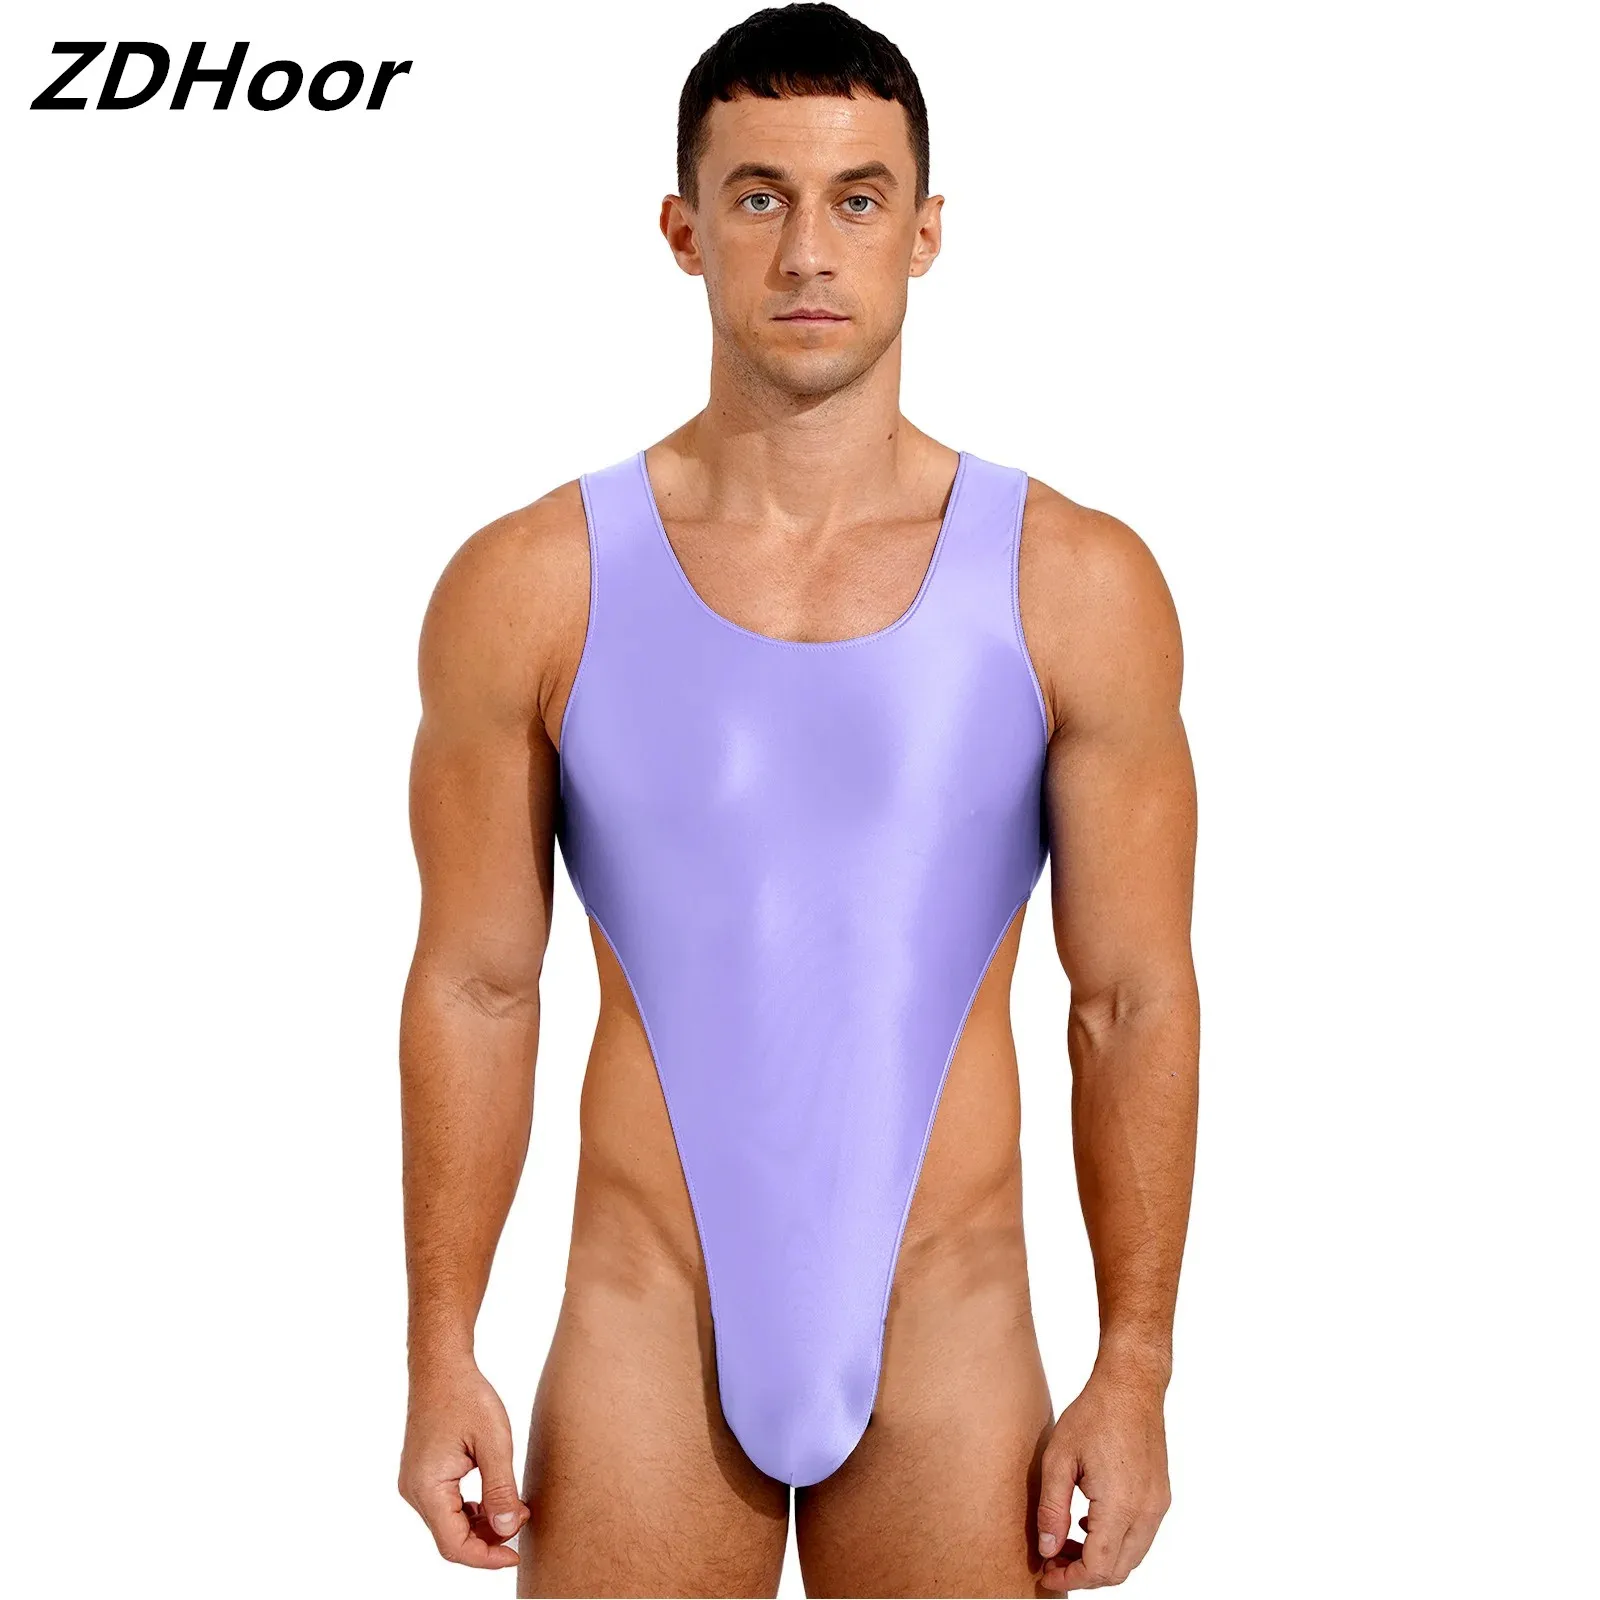 

Men Glossy Stretchy Swimwear U Neck Sleeveless Bodysuit High Cut Leotard One-Piece Swimsuit for Swimming Bodybuilding Exercise